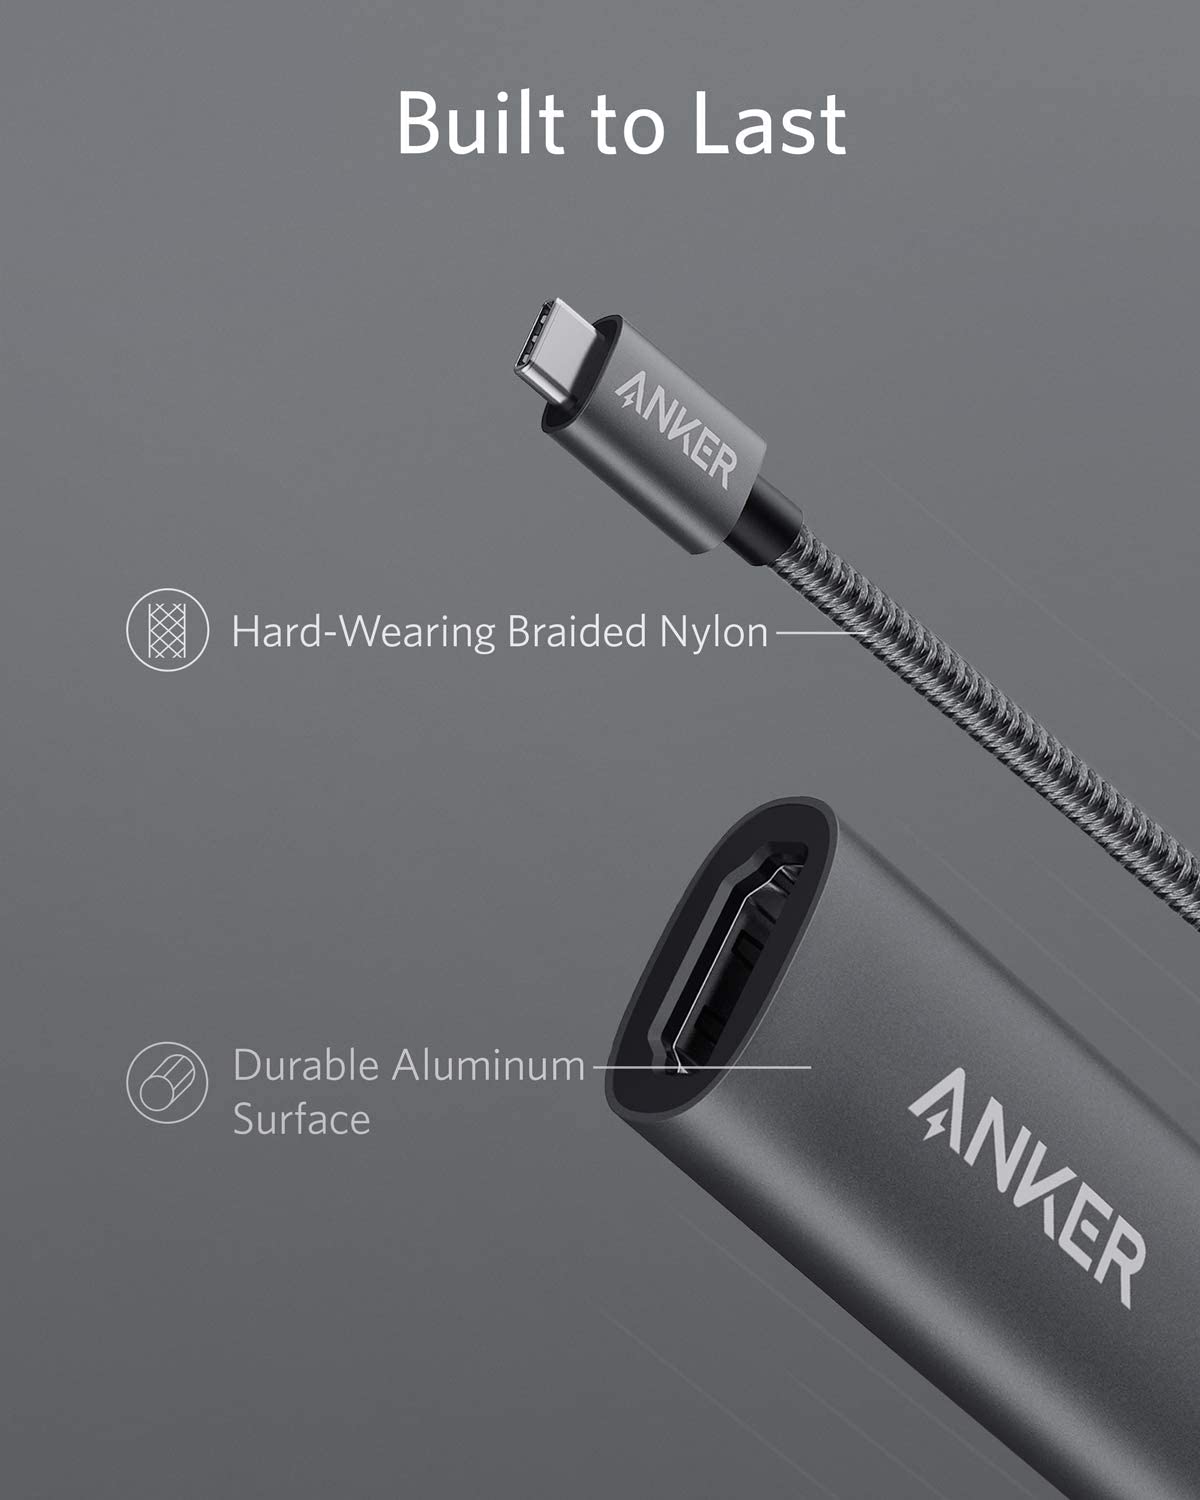 PowerExpand+ USB-C to HDMI Adapter